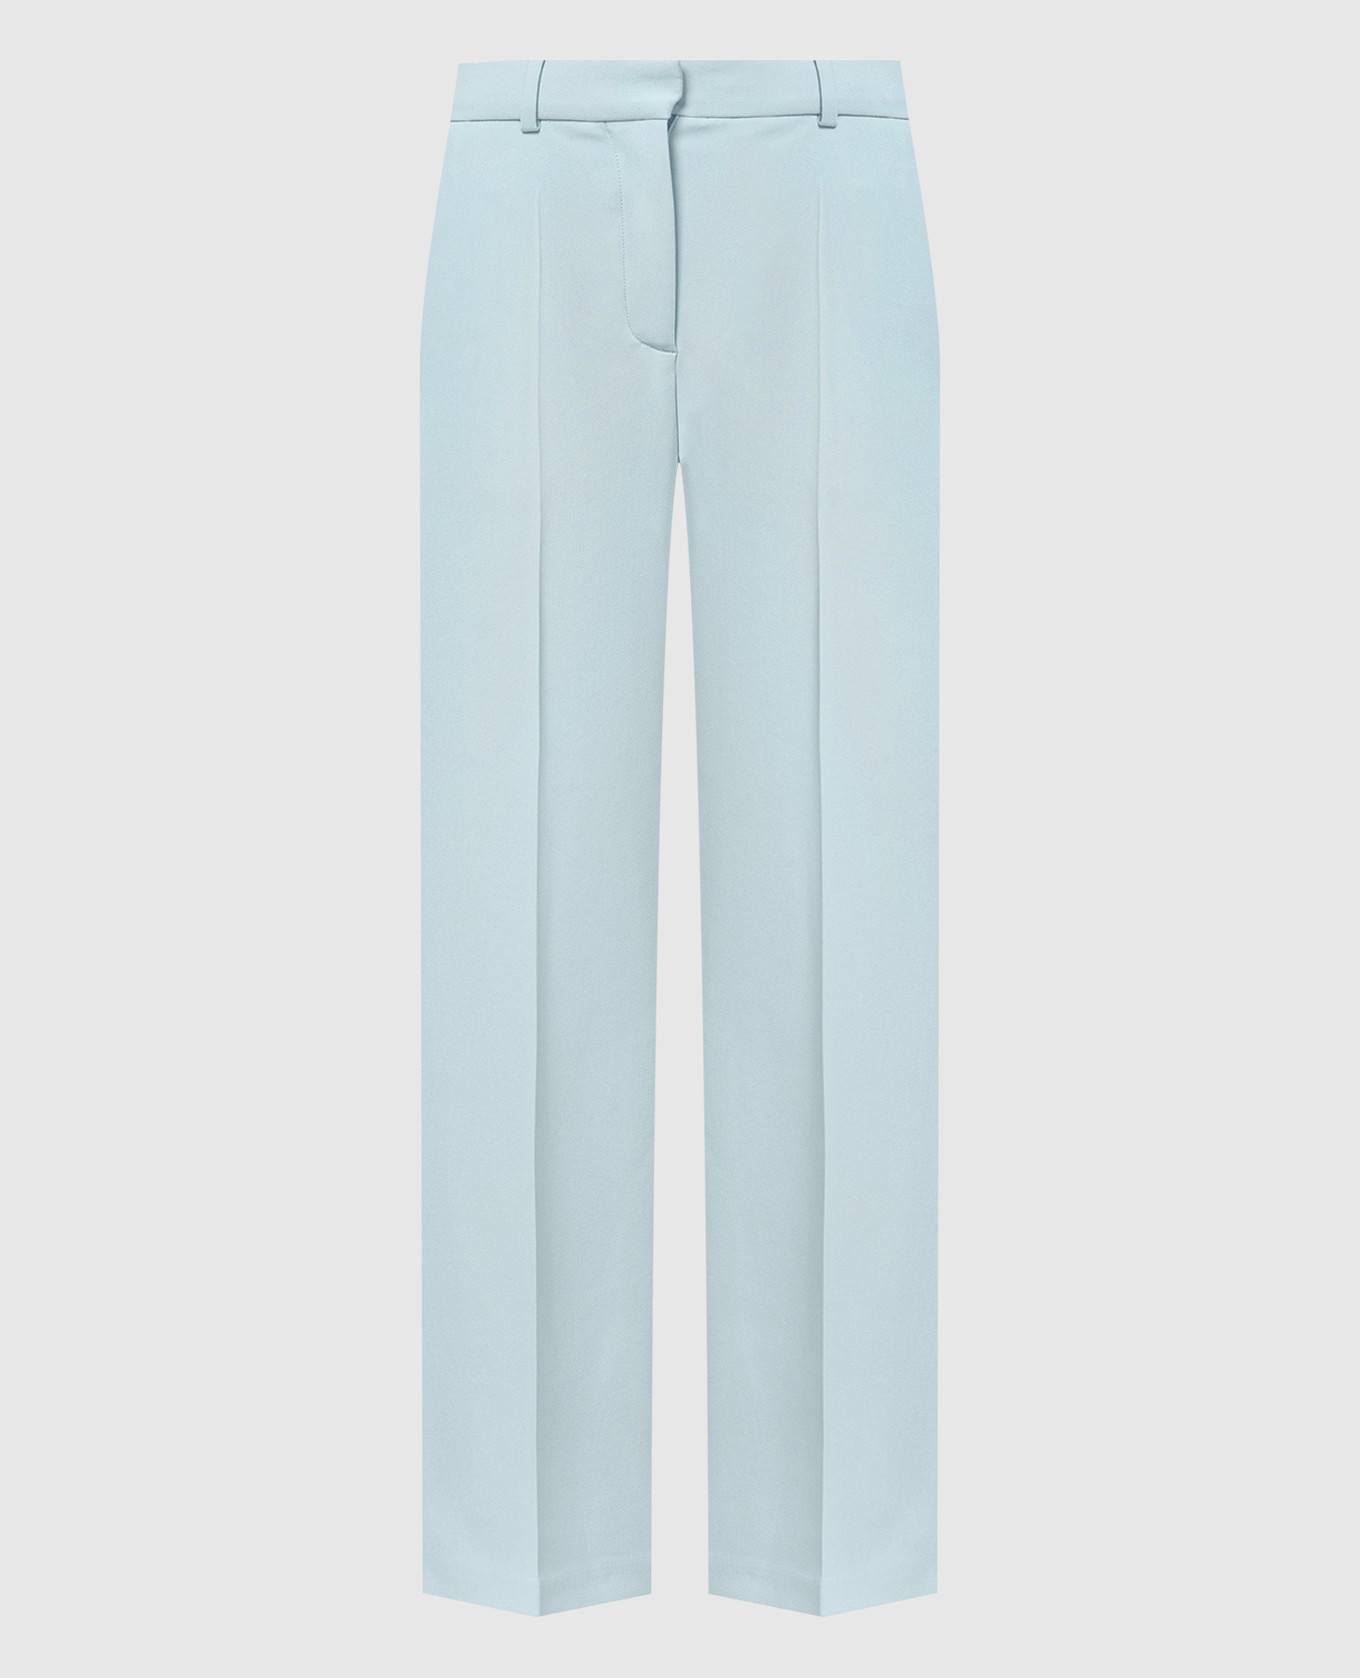 Morissey blue trousers